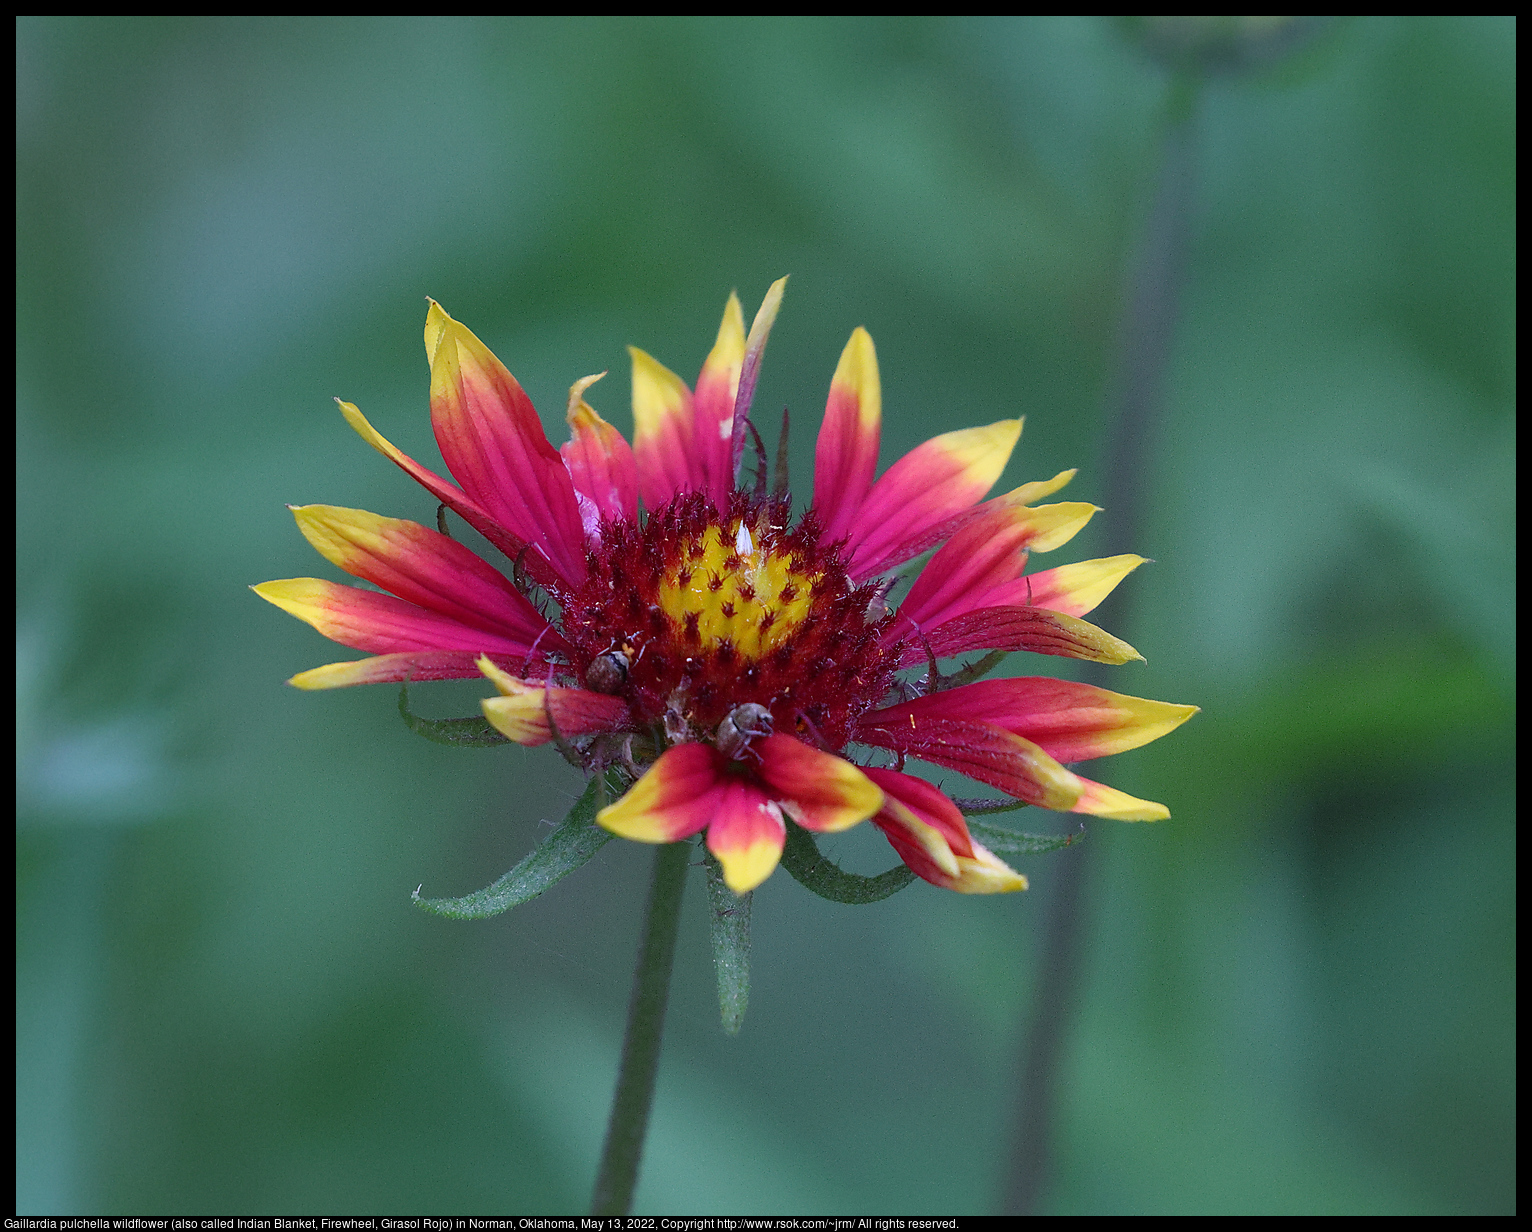 Gaillardia pulchella wildflower (also called Indian Blanket, Firewheel, Girasol Rojo) in Norman, Oklahoma, May 13, 2022